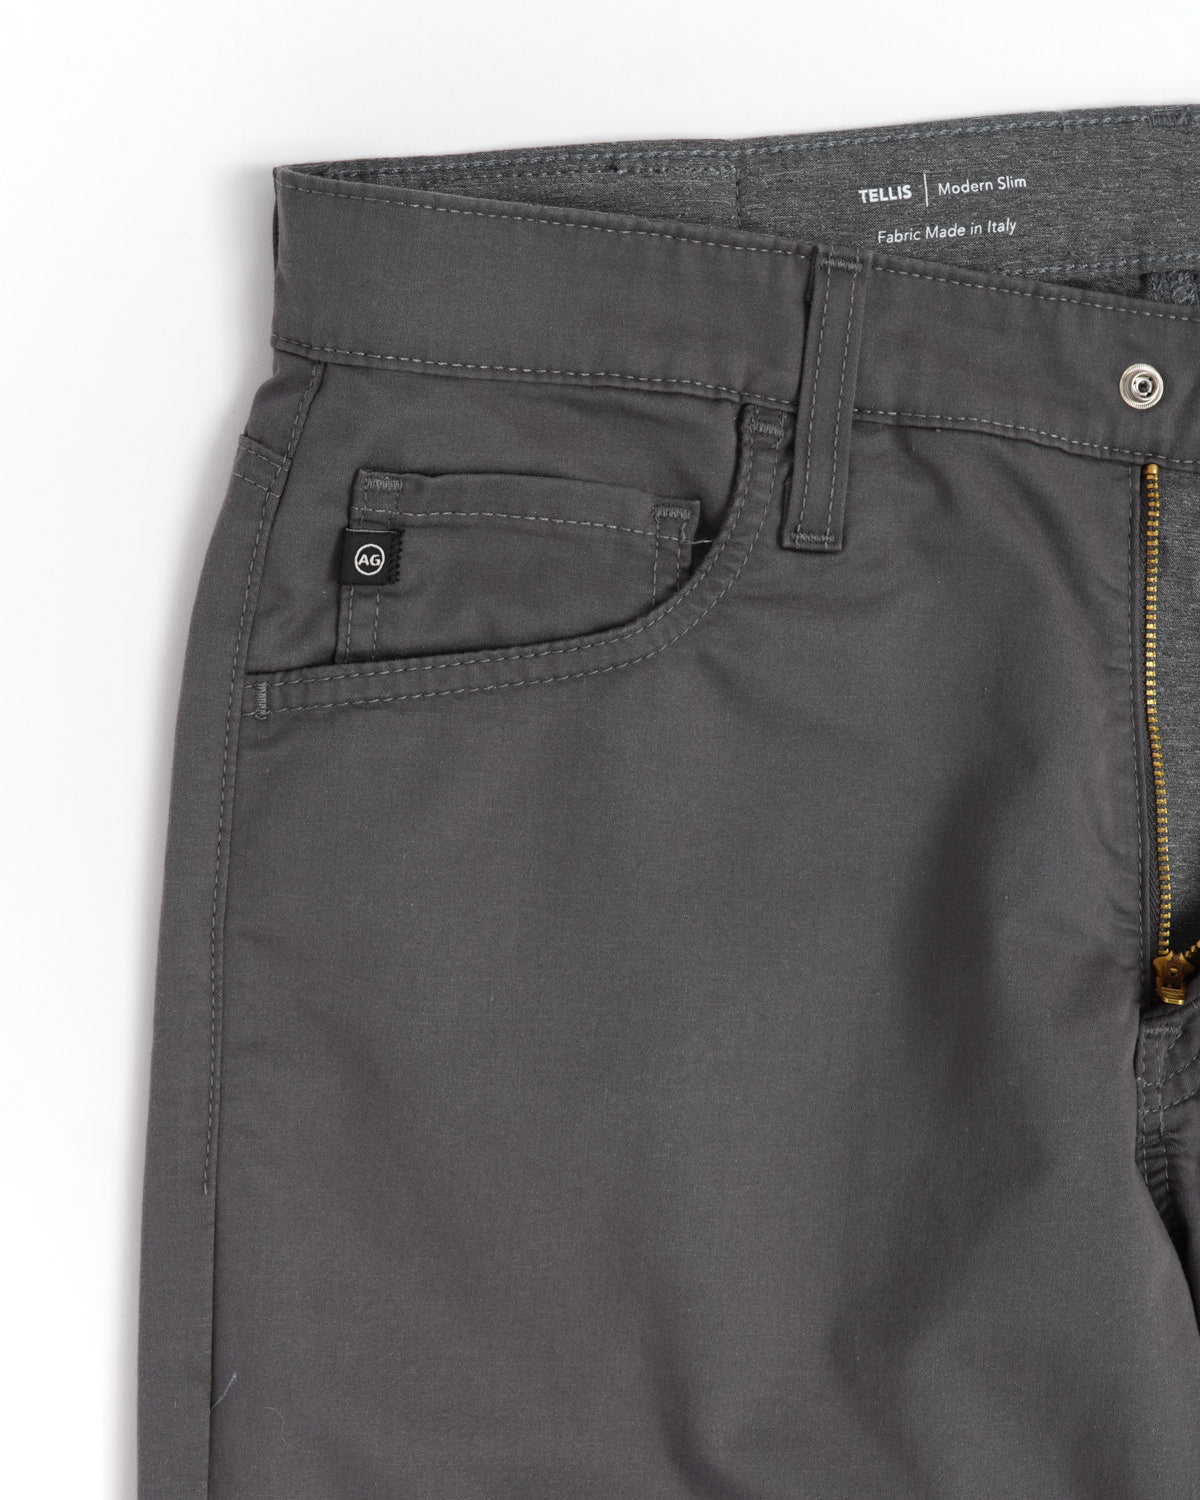 AG Jeans 'Tellis' Folkstone Grey 5 Pocket Pant 